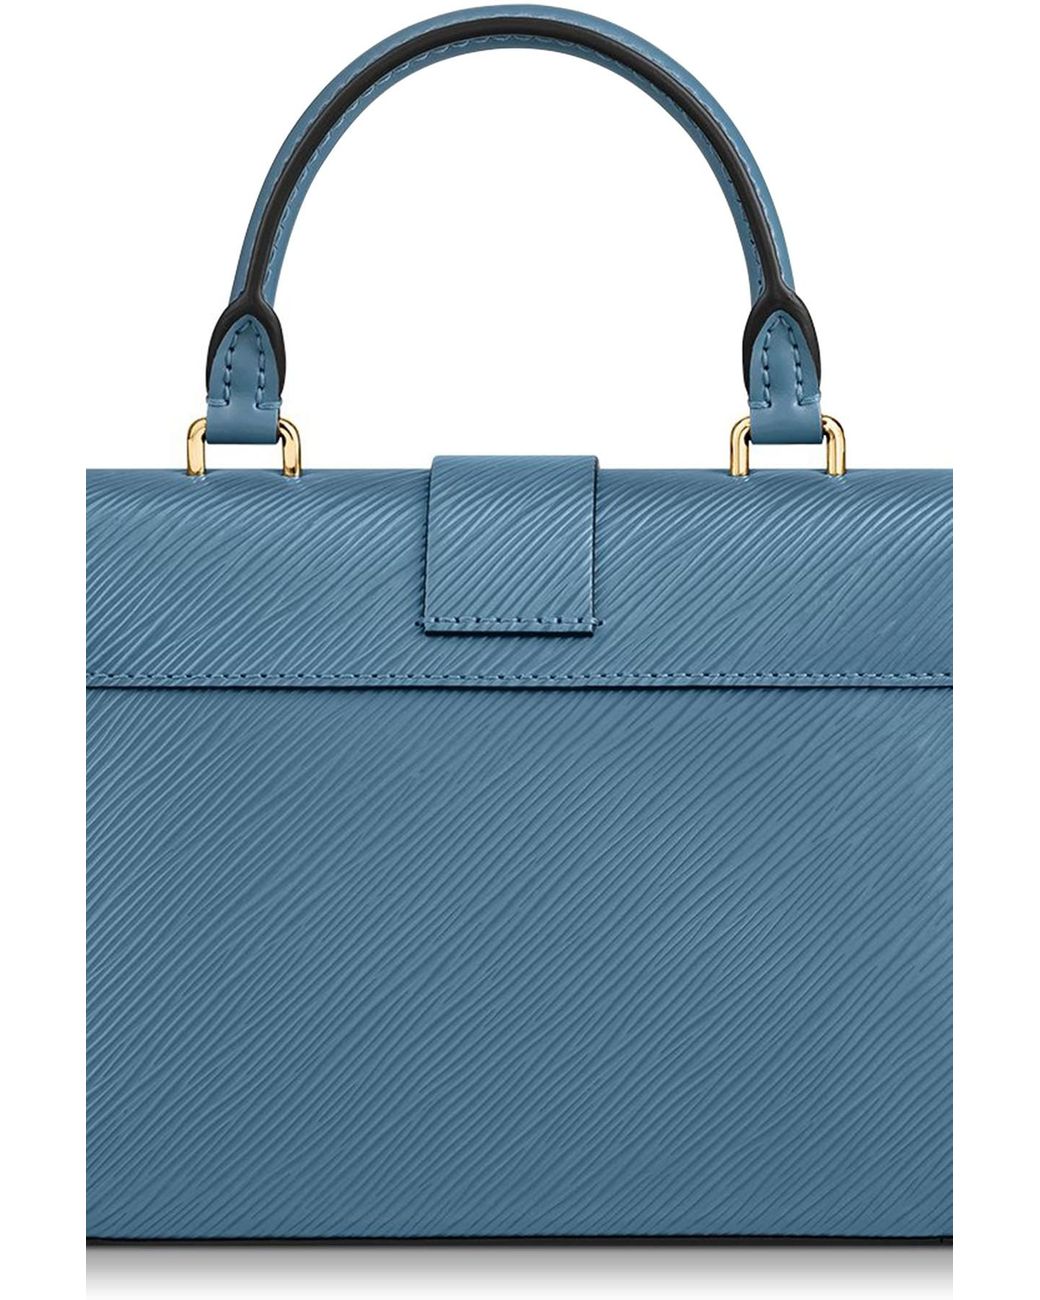 Louis Vuitton LOCKY Bb Leather Handbag